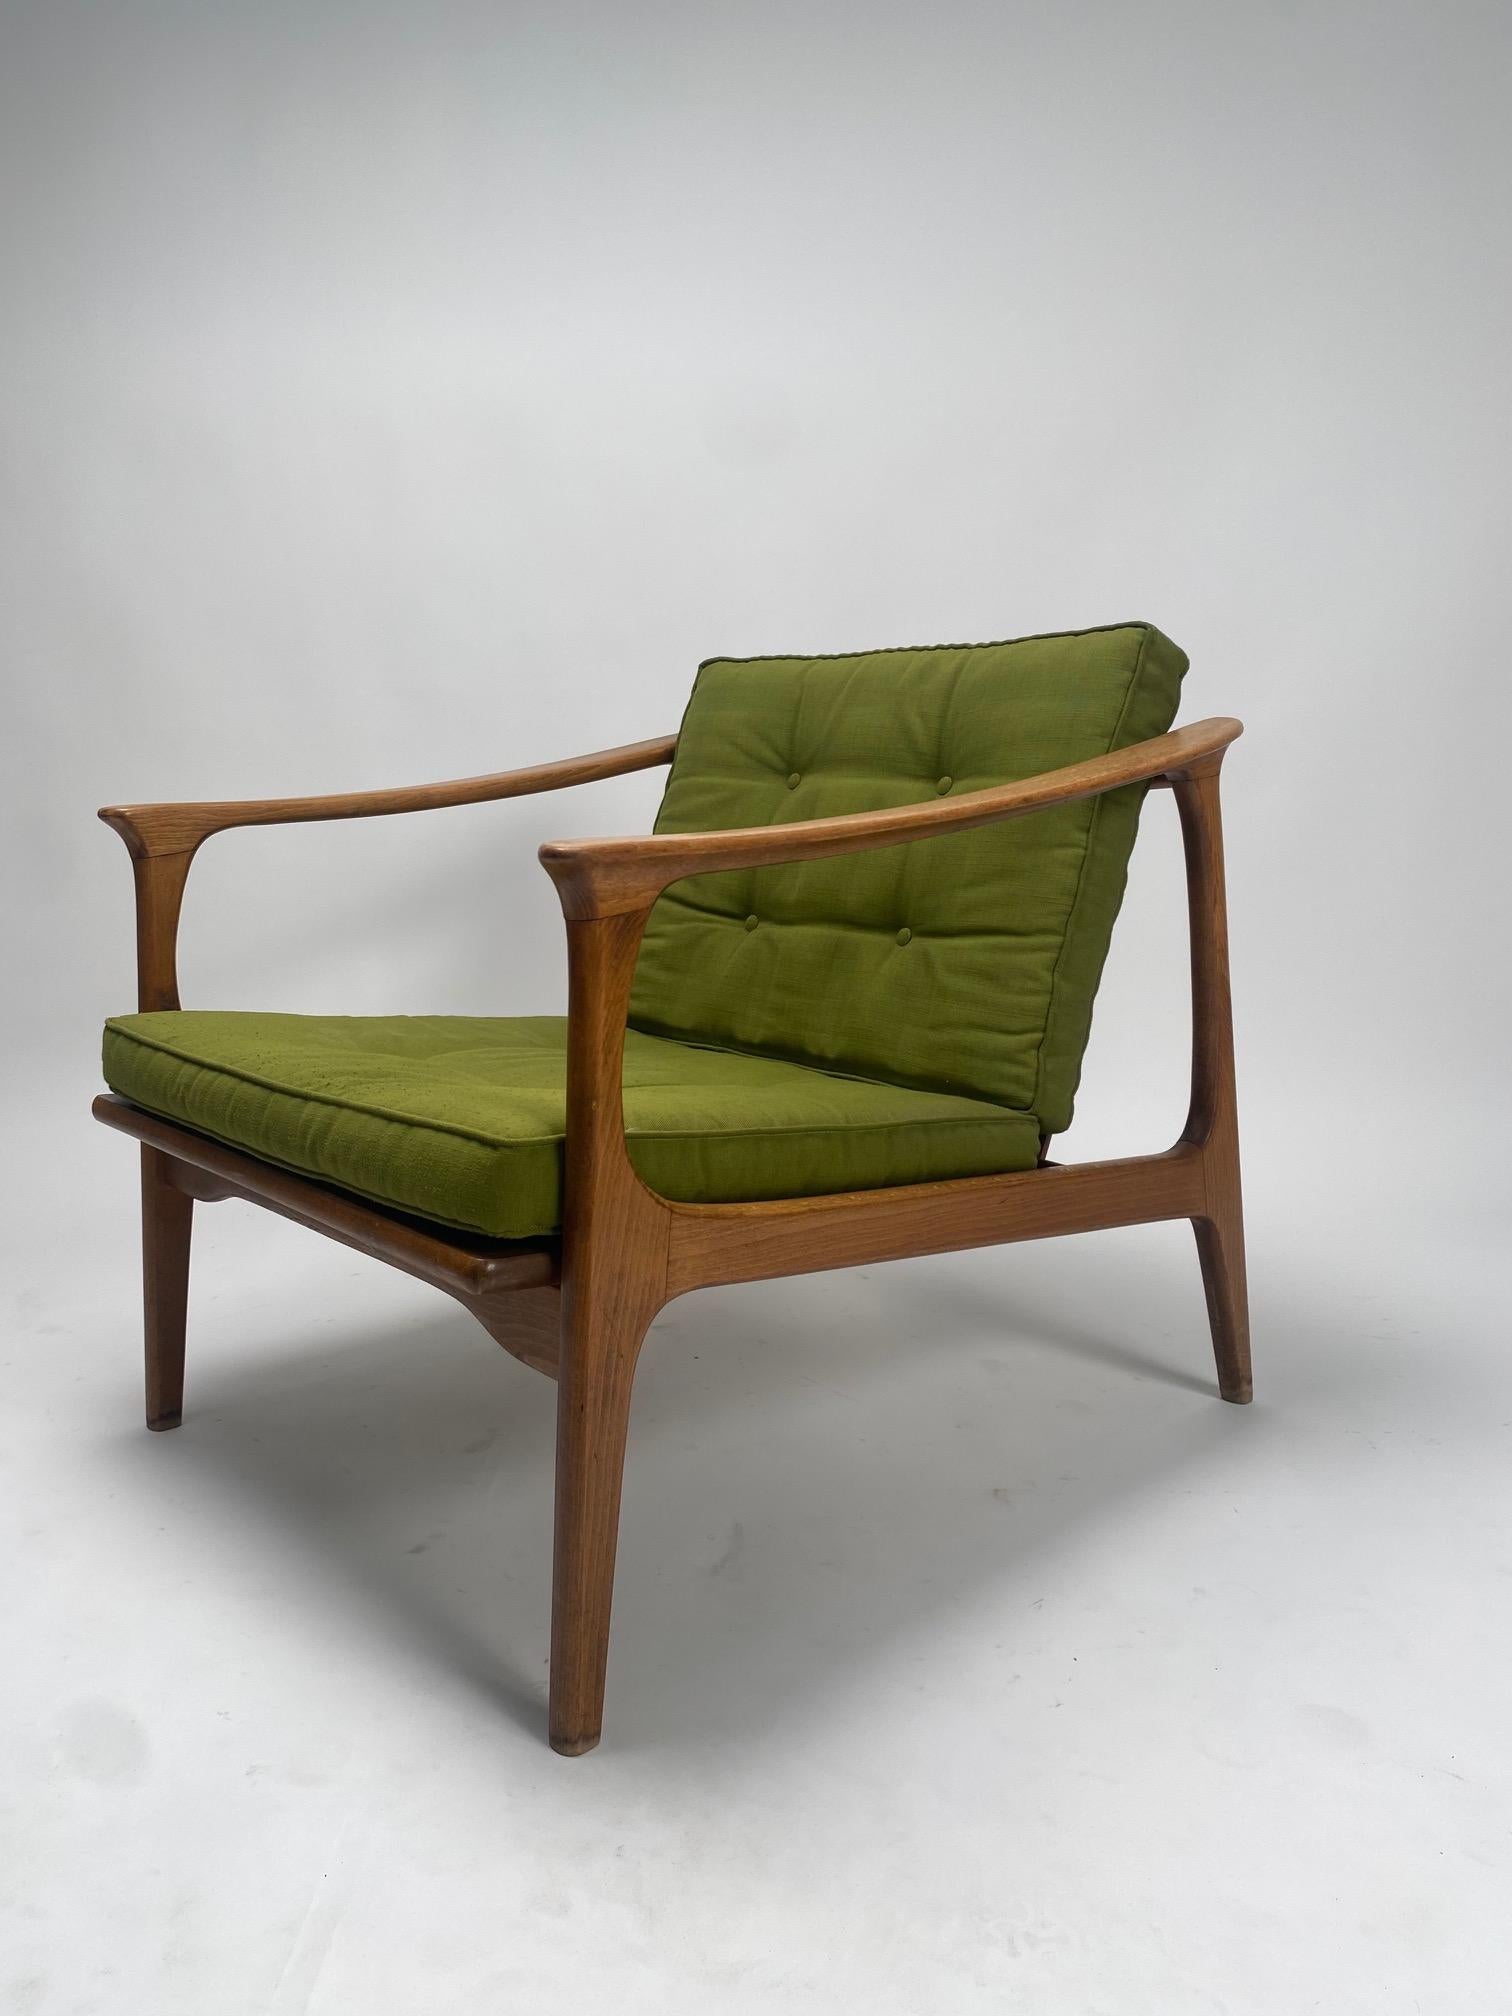 Danish Mid Century modern organic armchair, Denmark, 1960s.